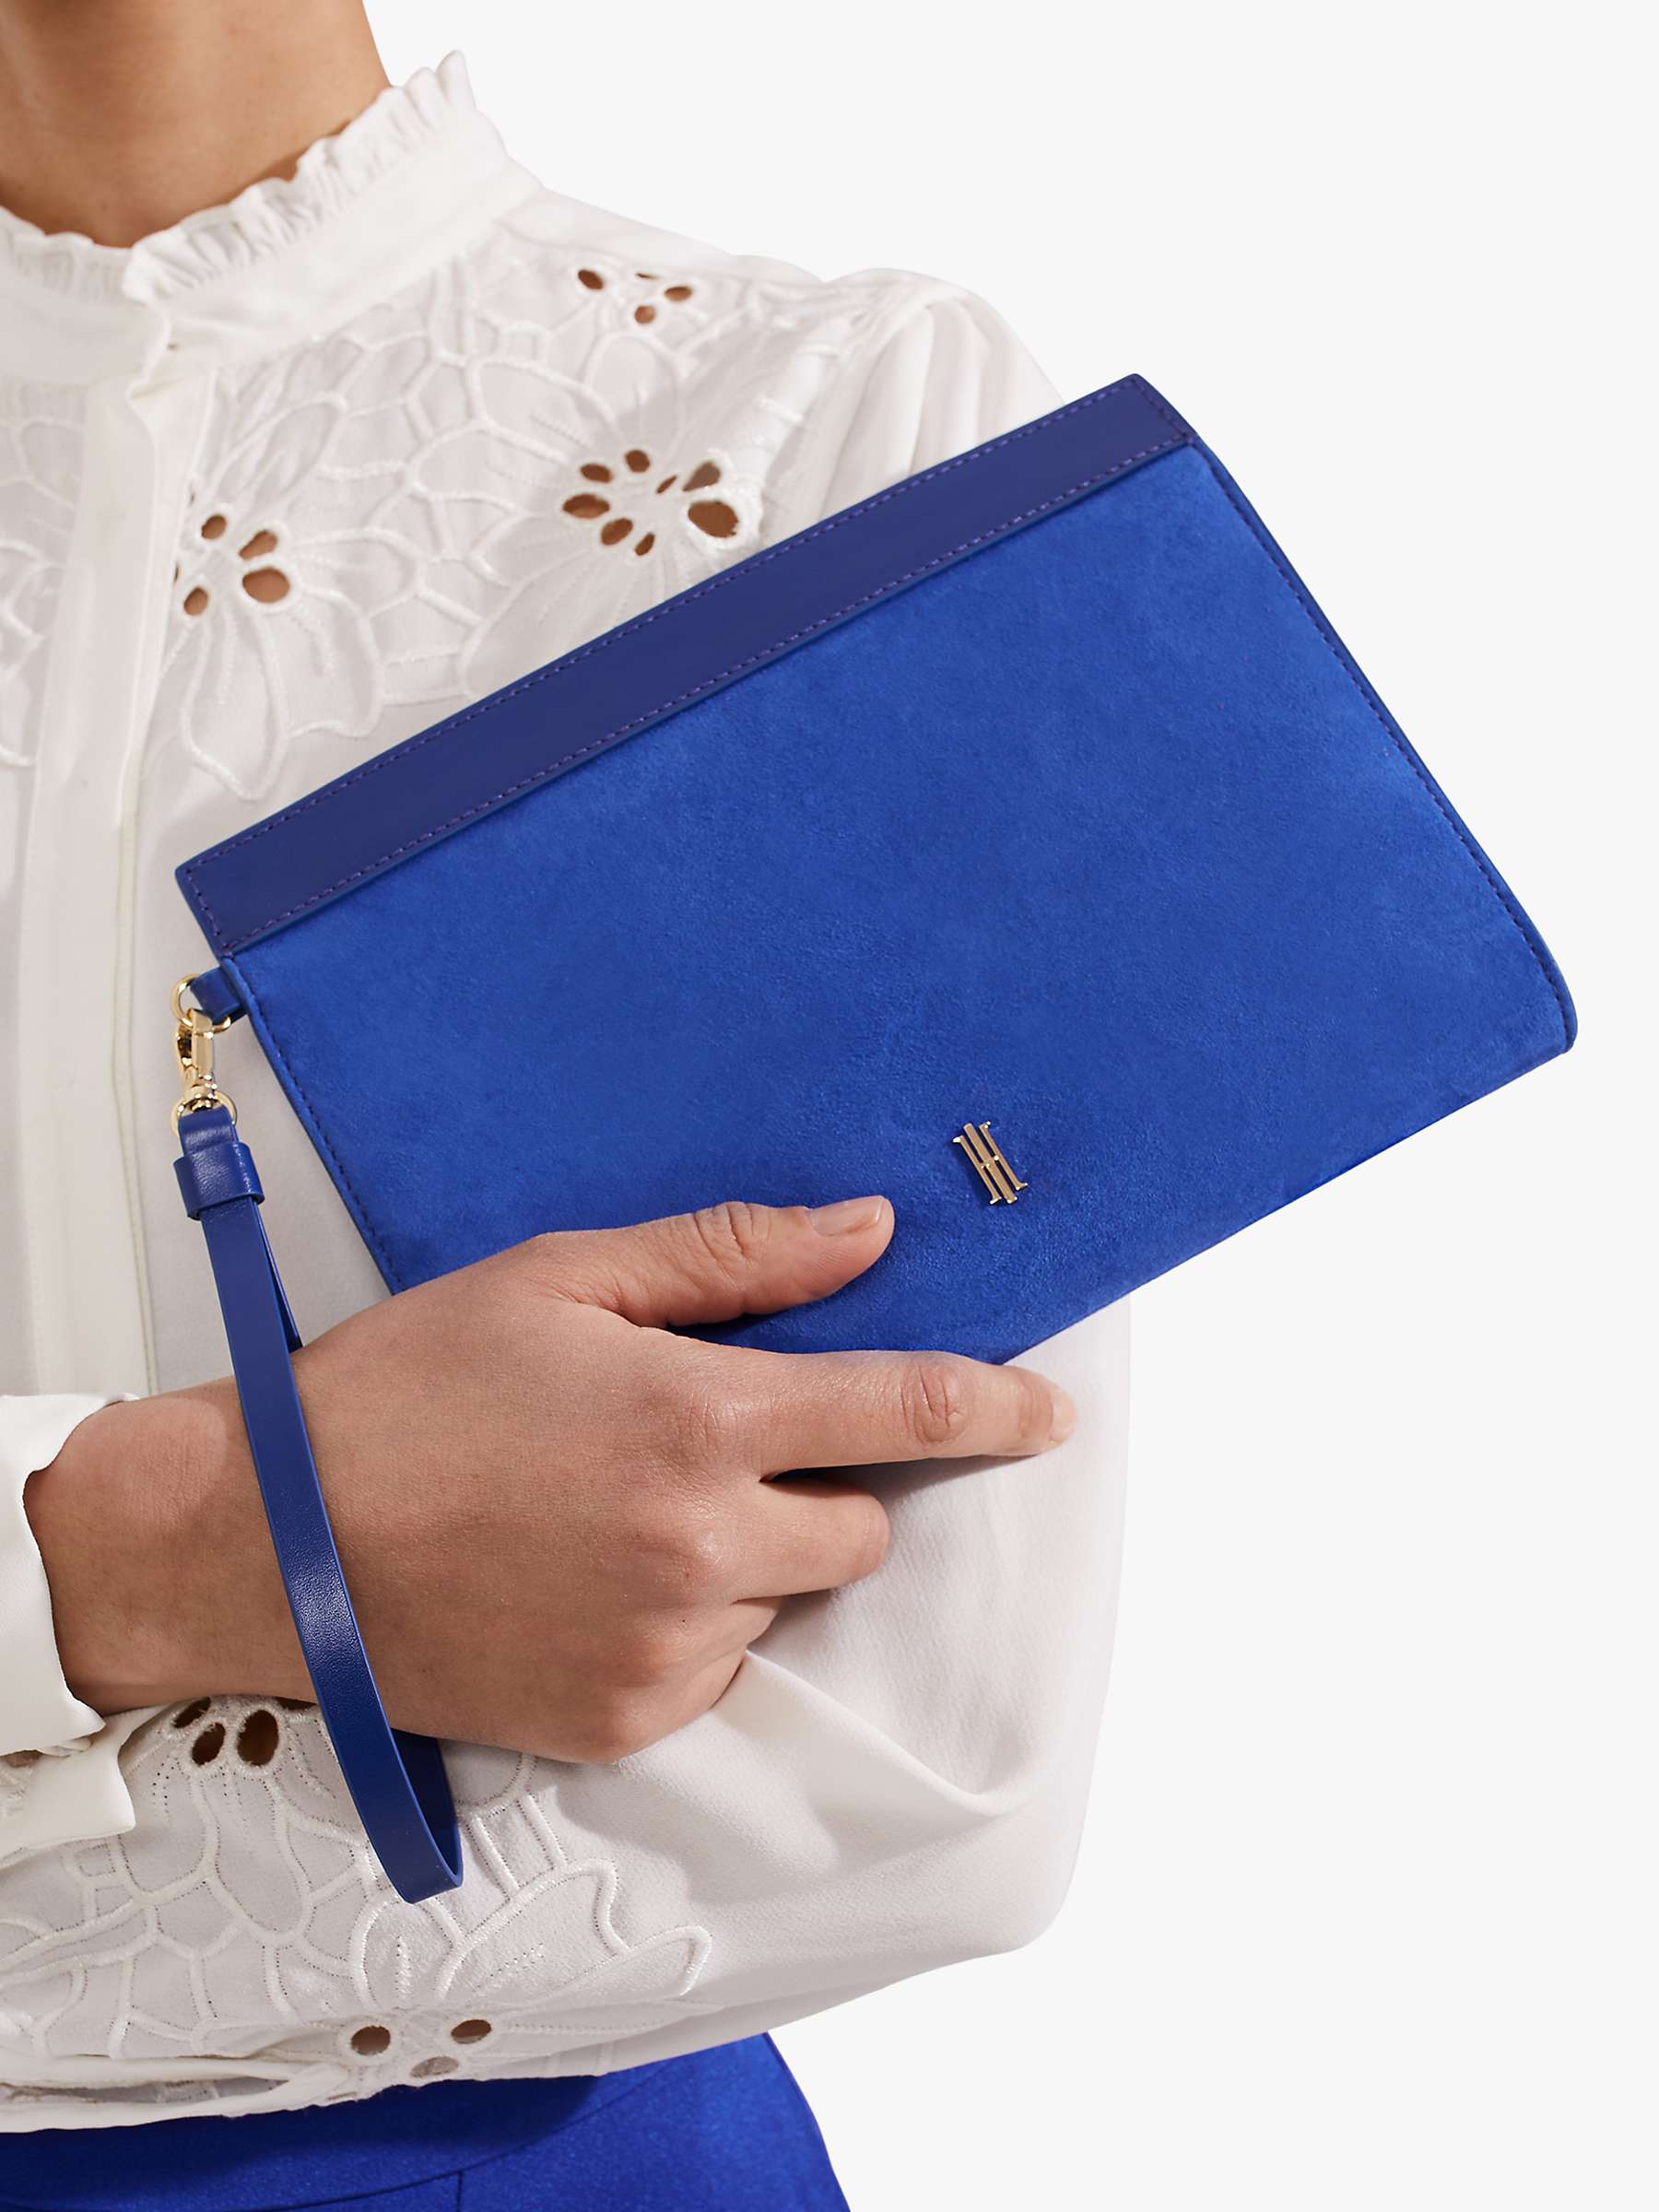 Buy Hobbs Catherine Leather Wristlet Bag, Lapis Blue Online at johnlewis.com